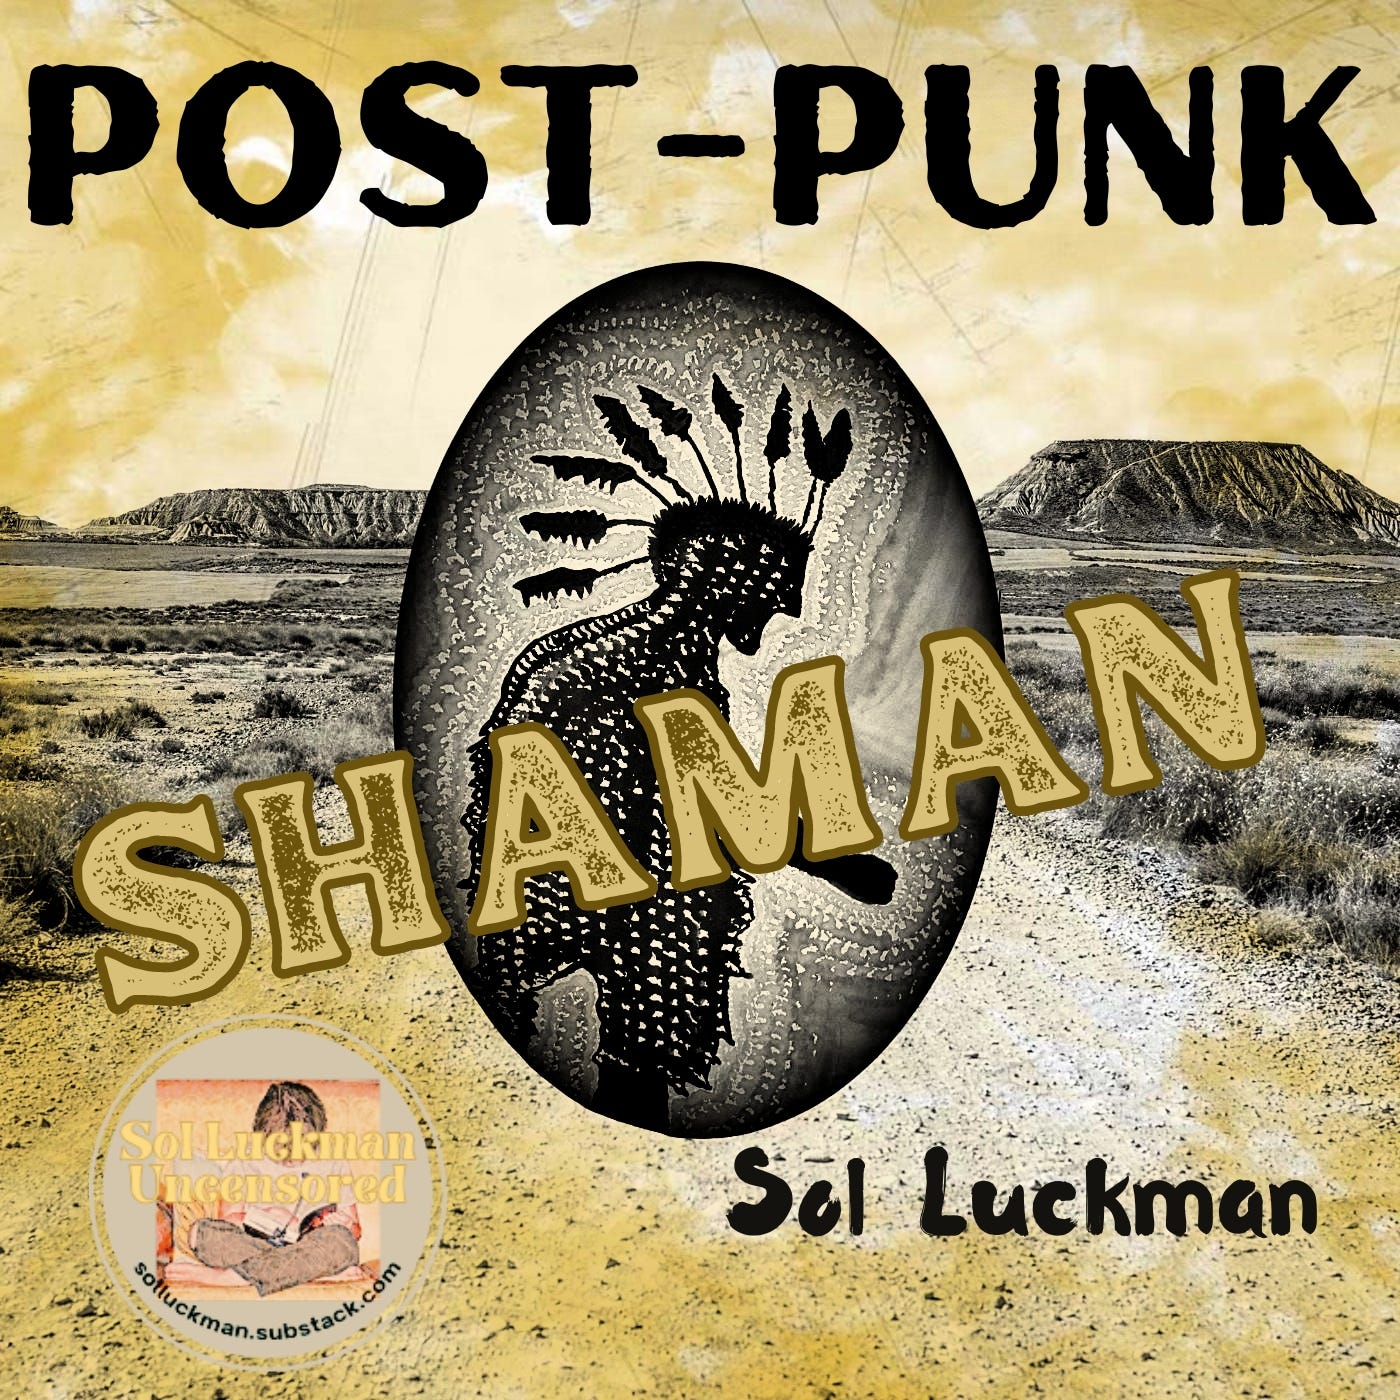 🎸 Rock Out to Sol Luckman’s Debut Album, POST-PUNK SHAMAN